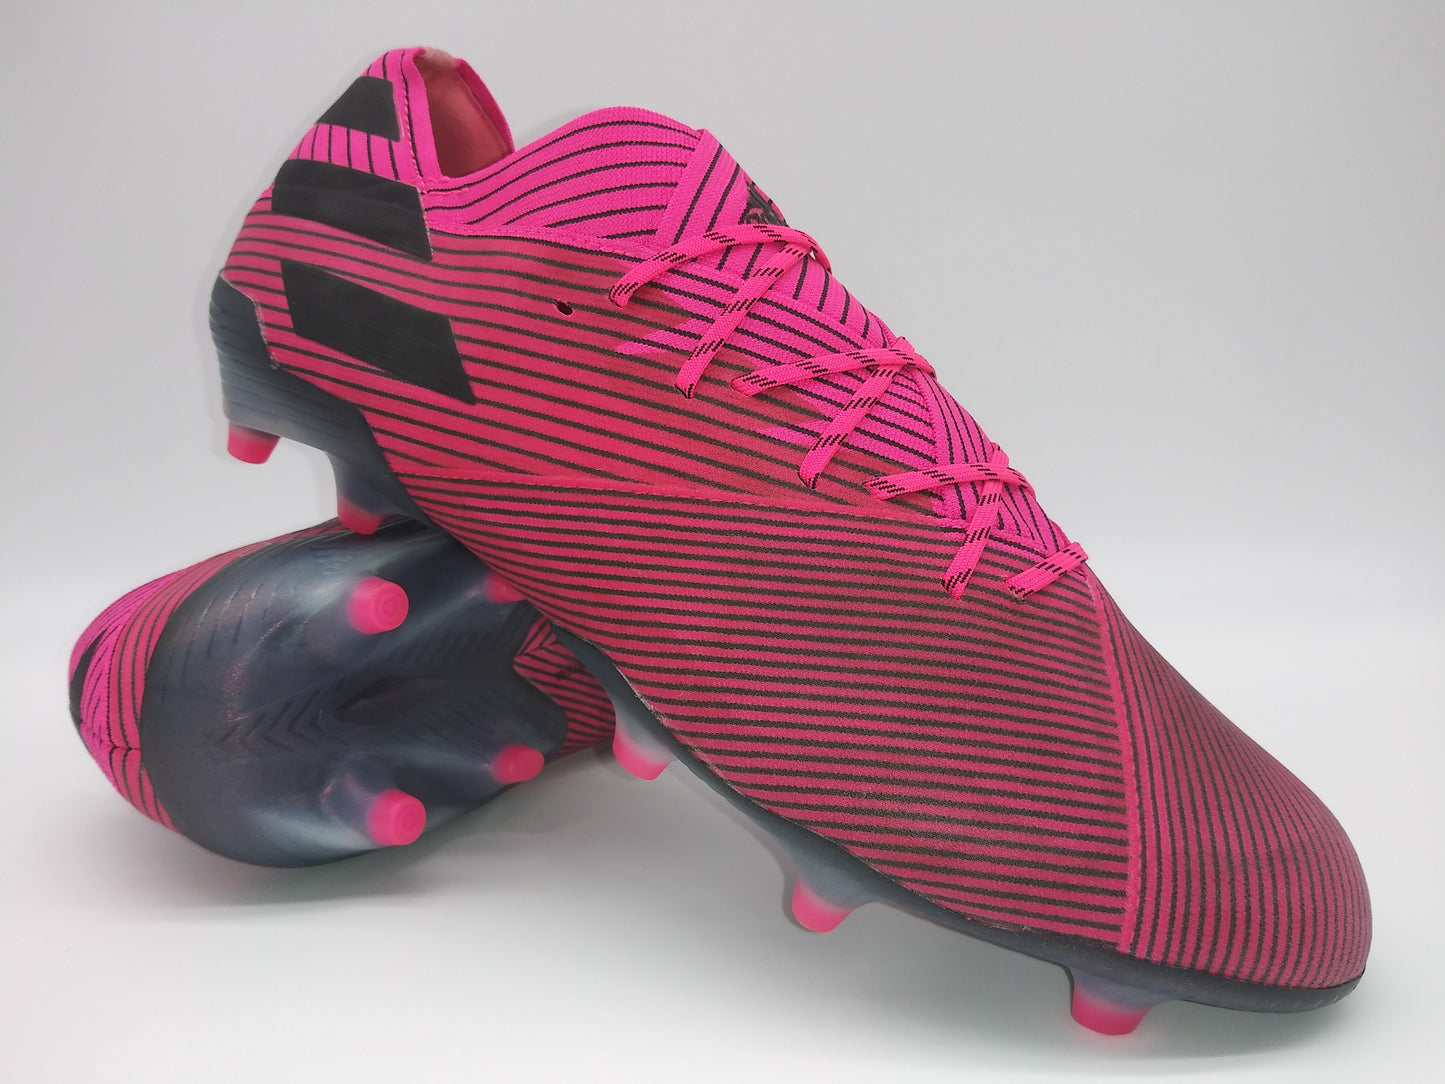 Adidas Nemeziz 19.1 FG Pink Black